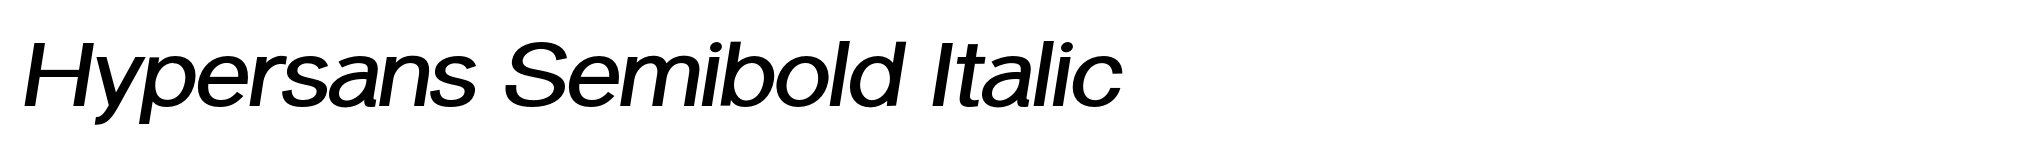 Hypersans Semibold Italic image